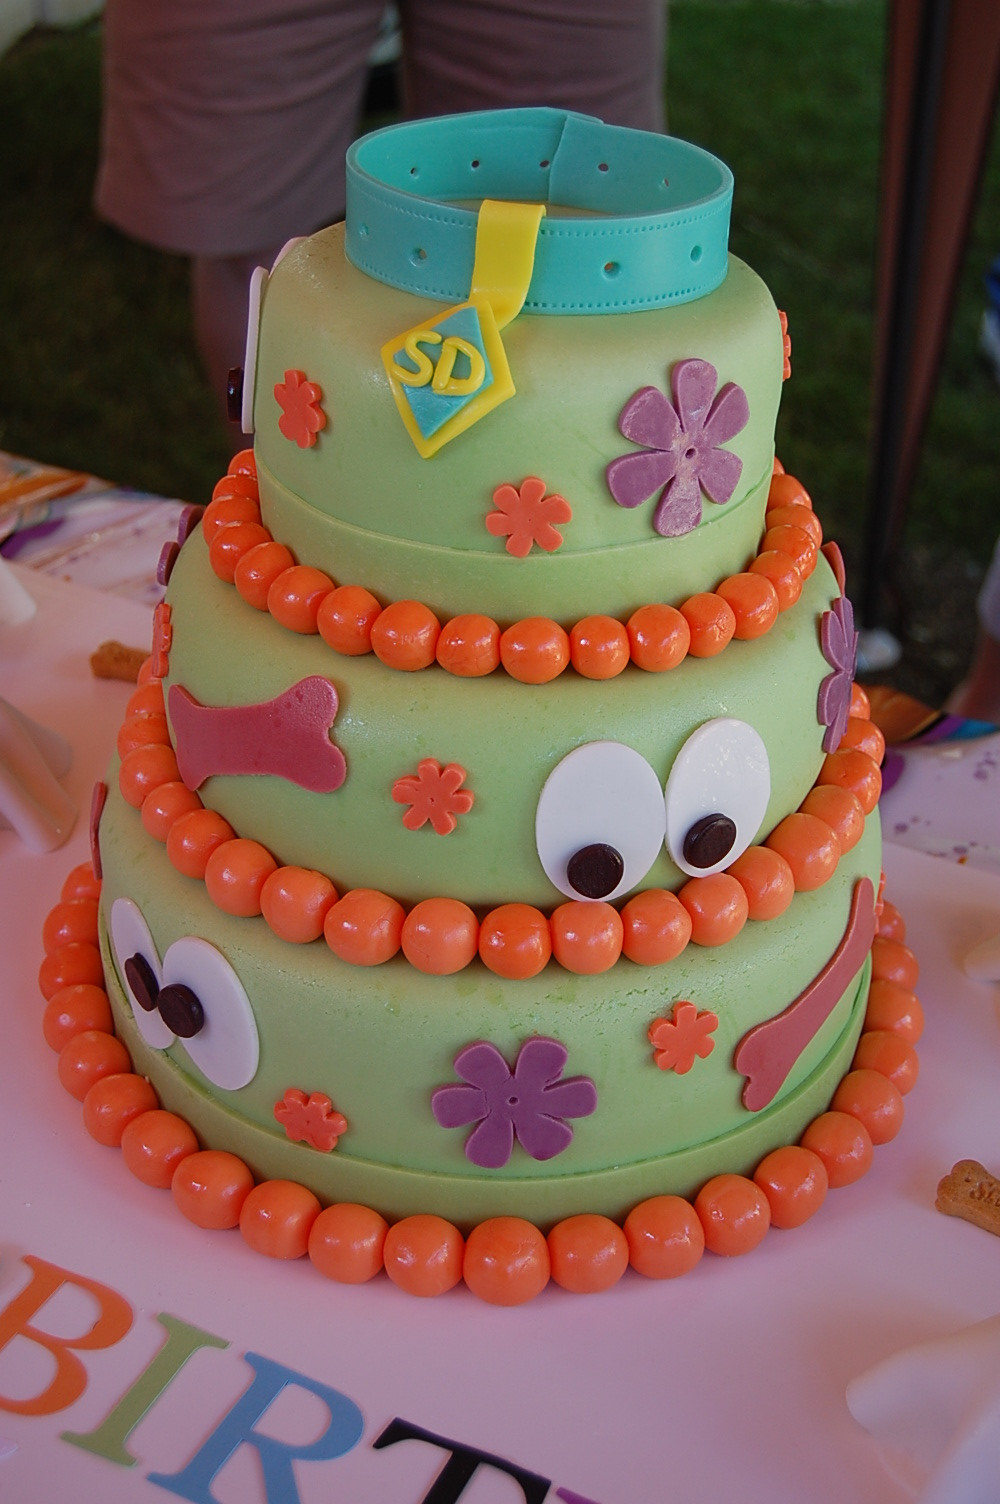 Scooby Doo Birthday Cake
 A Little Slice of Heaven Scooby Doo Mystery Cake